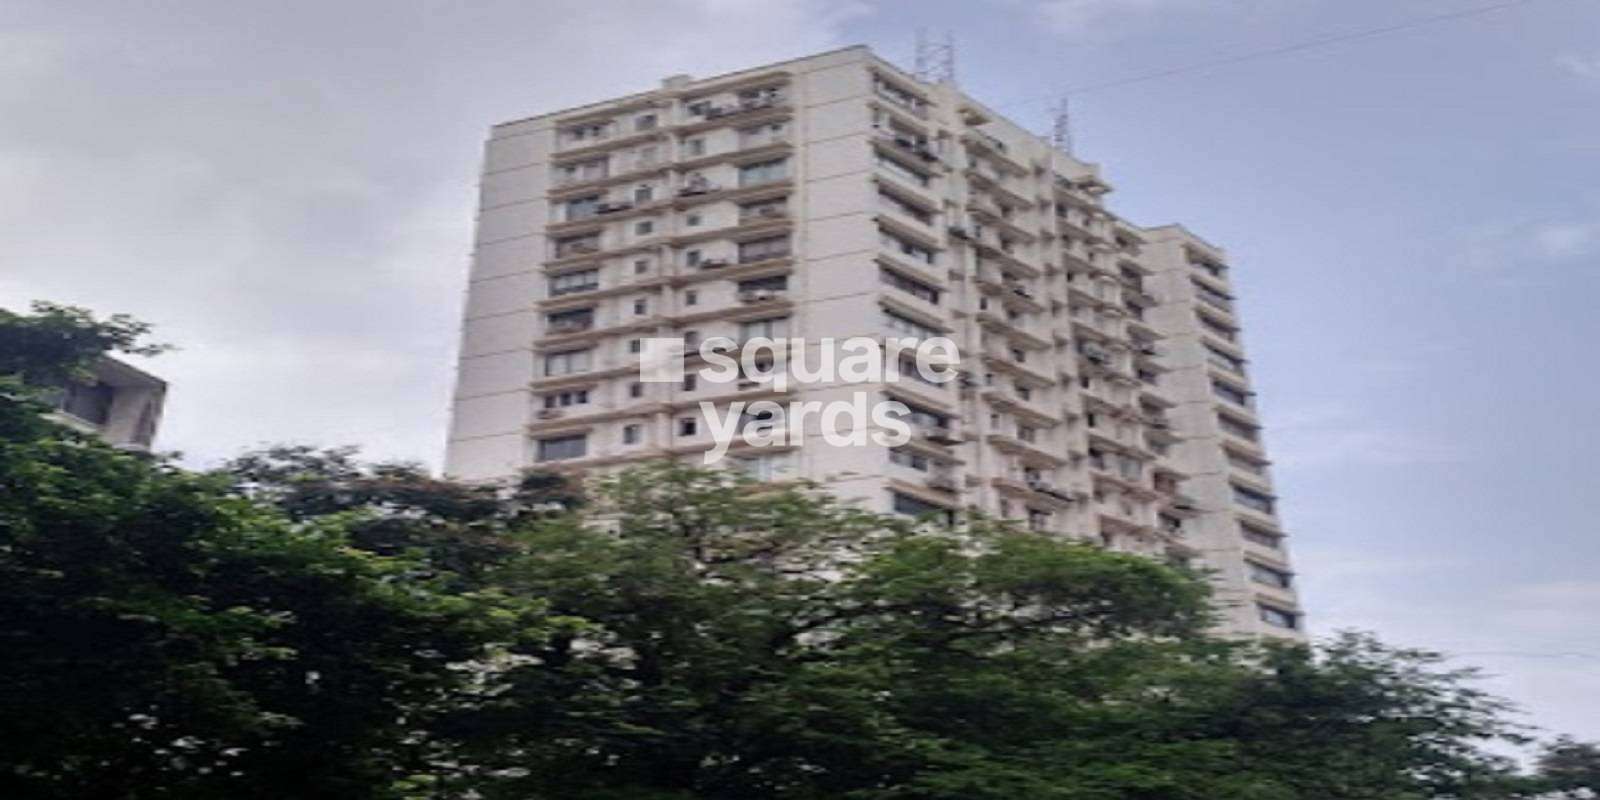 Pushpak Apartments Tardeo Cover Image